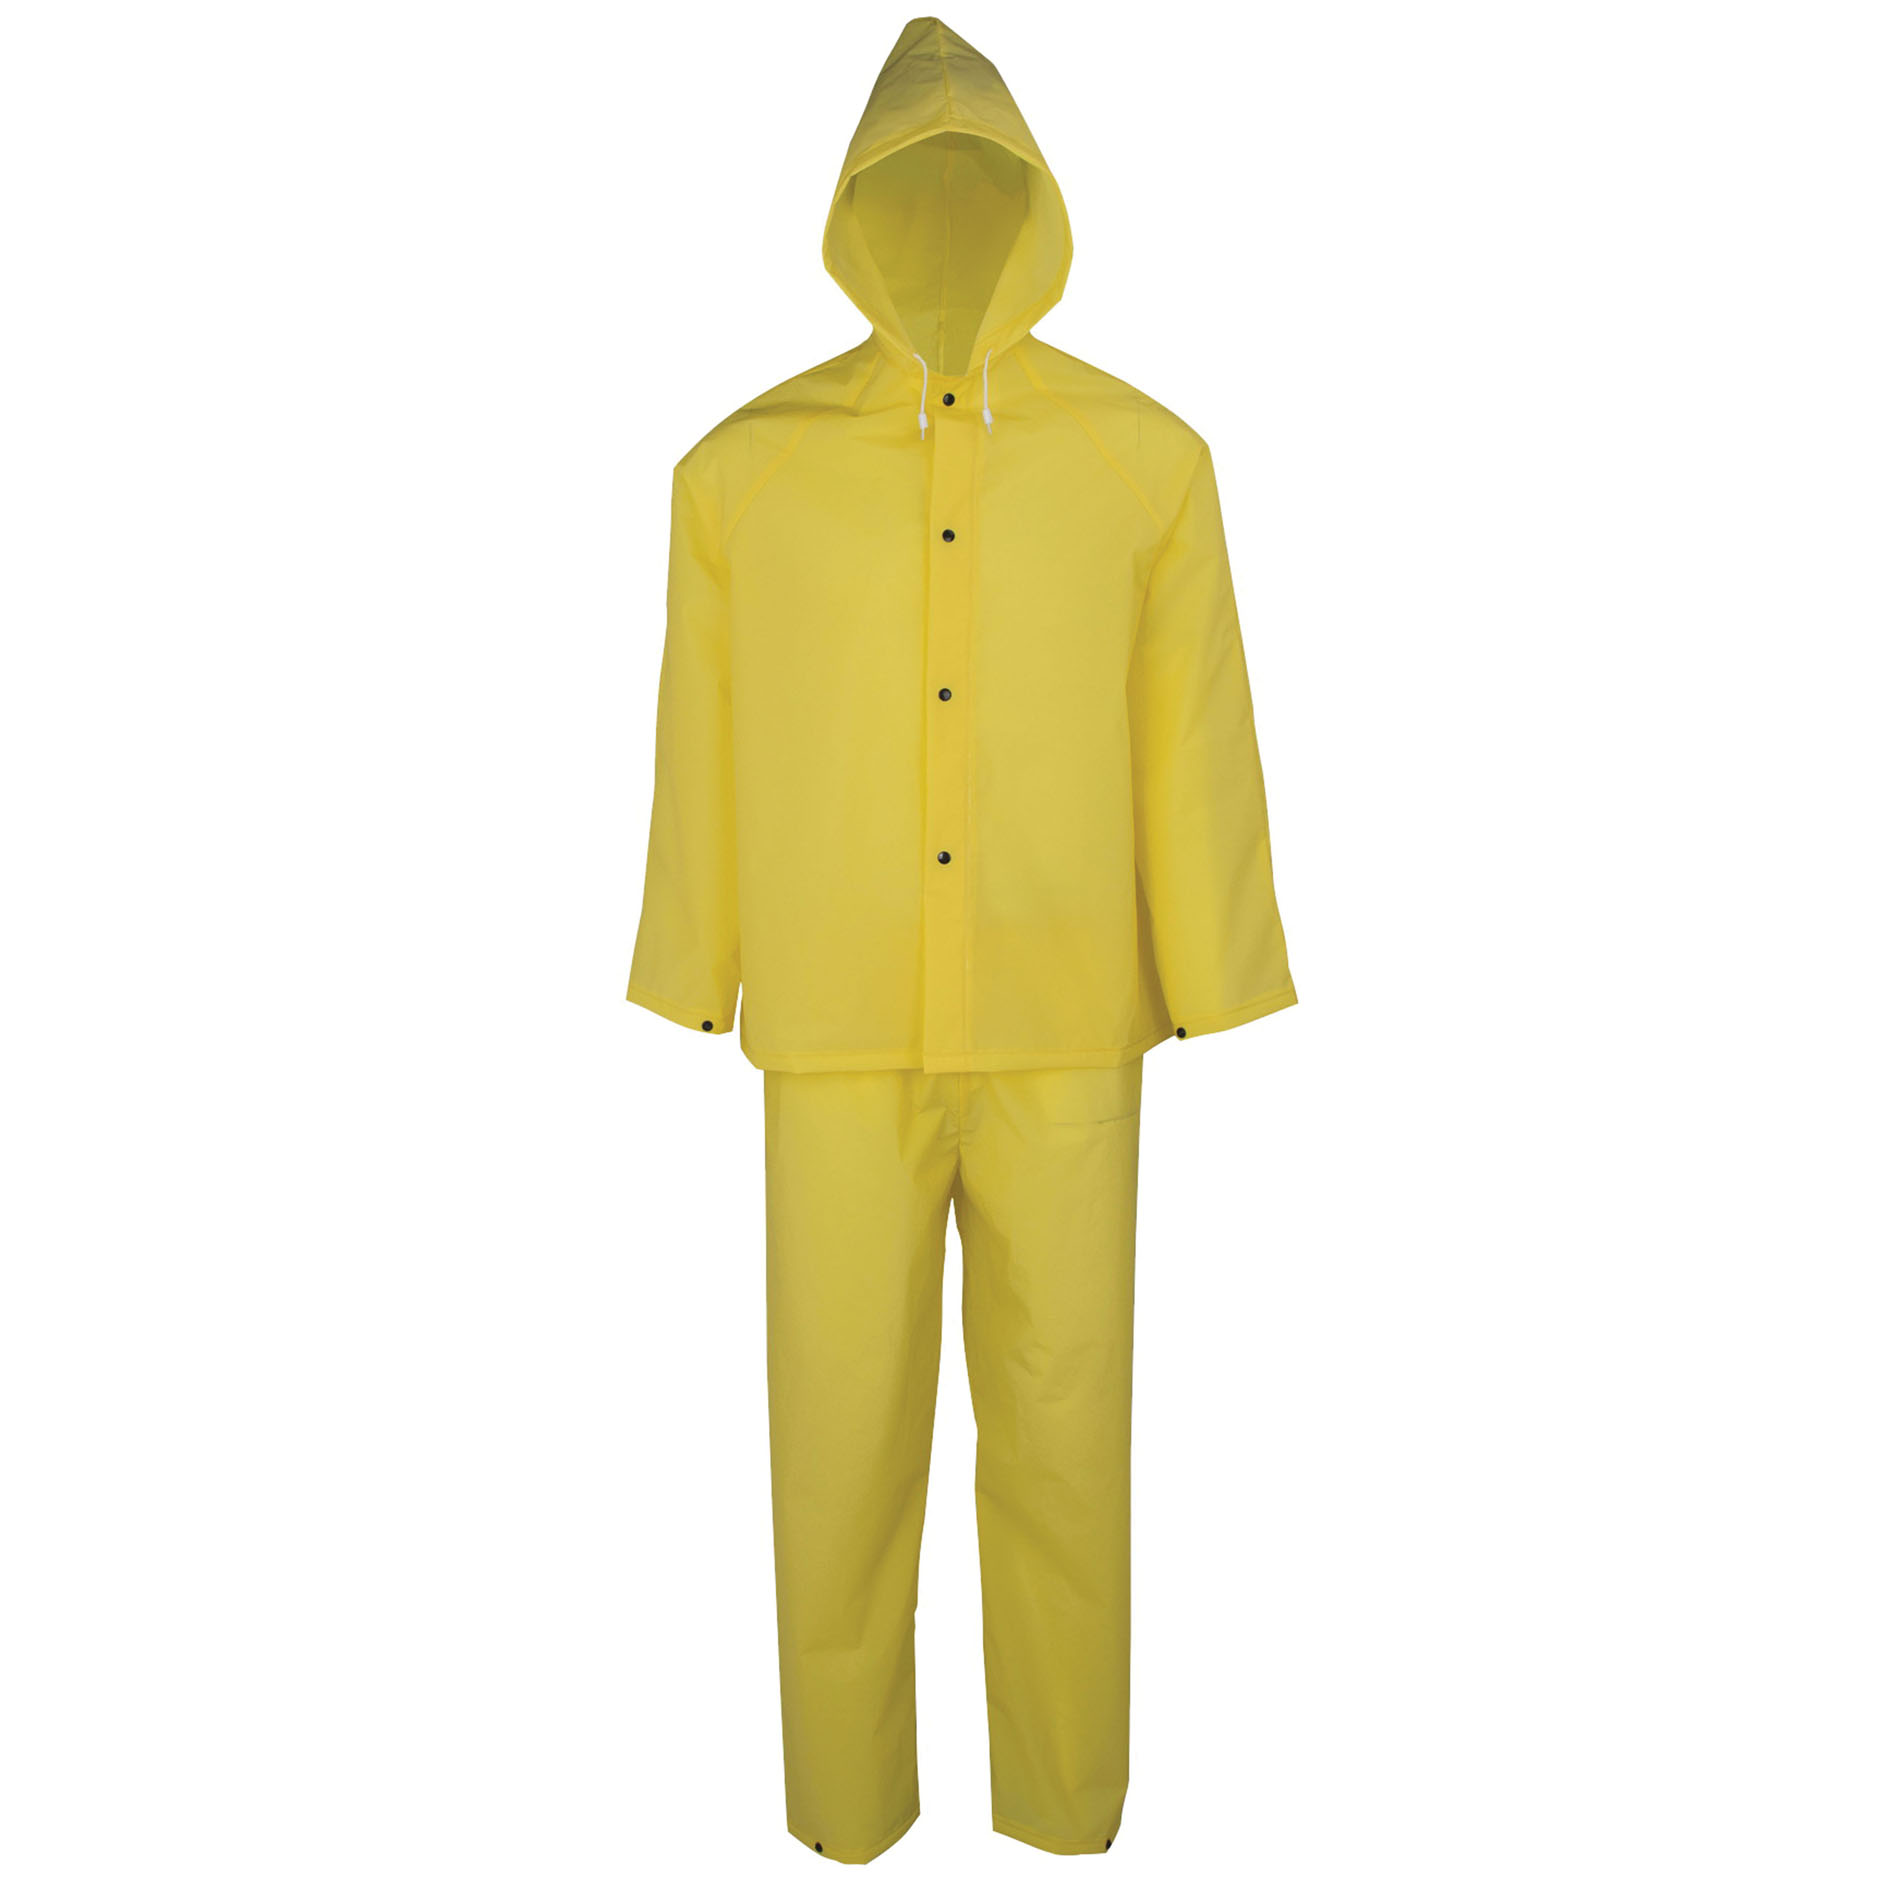 RS2-01-L Rain Suit, L, 42 in Inseam, EVA, Yellow, Hooded Collar, Snap Down Storm Flap Closure